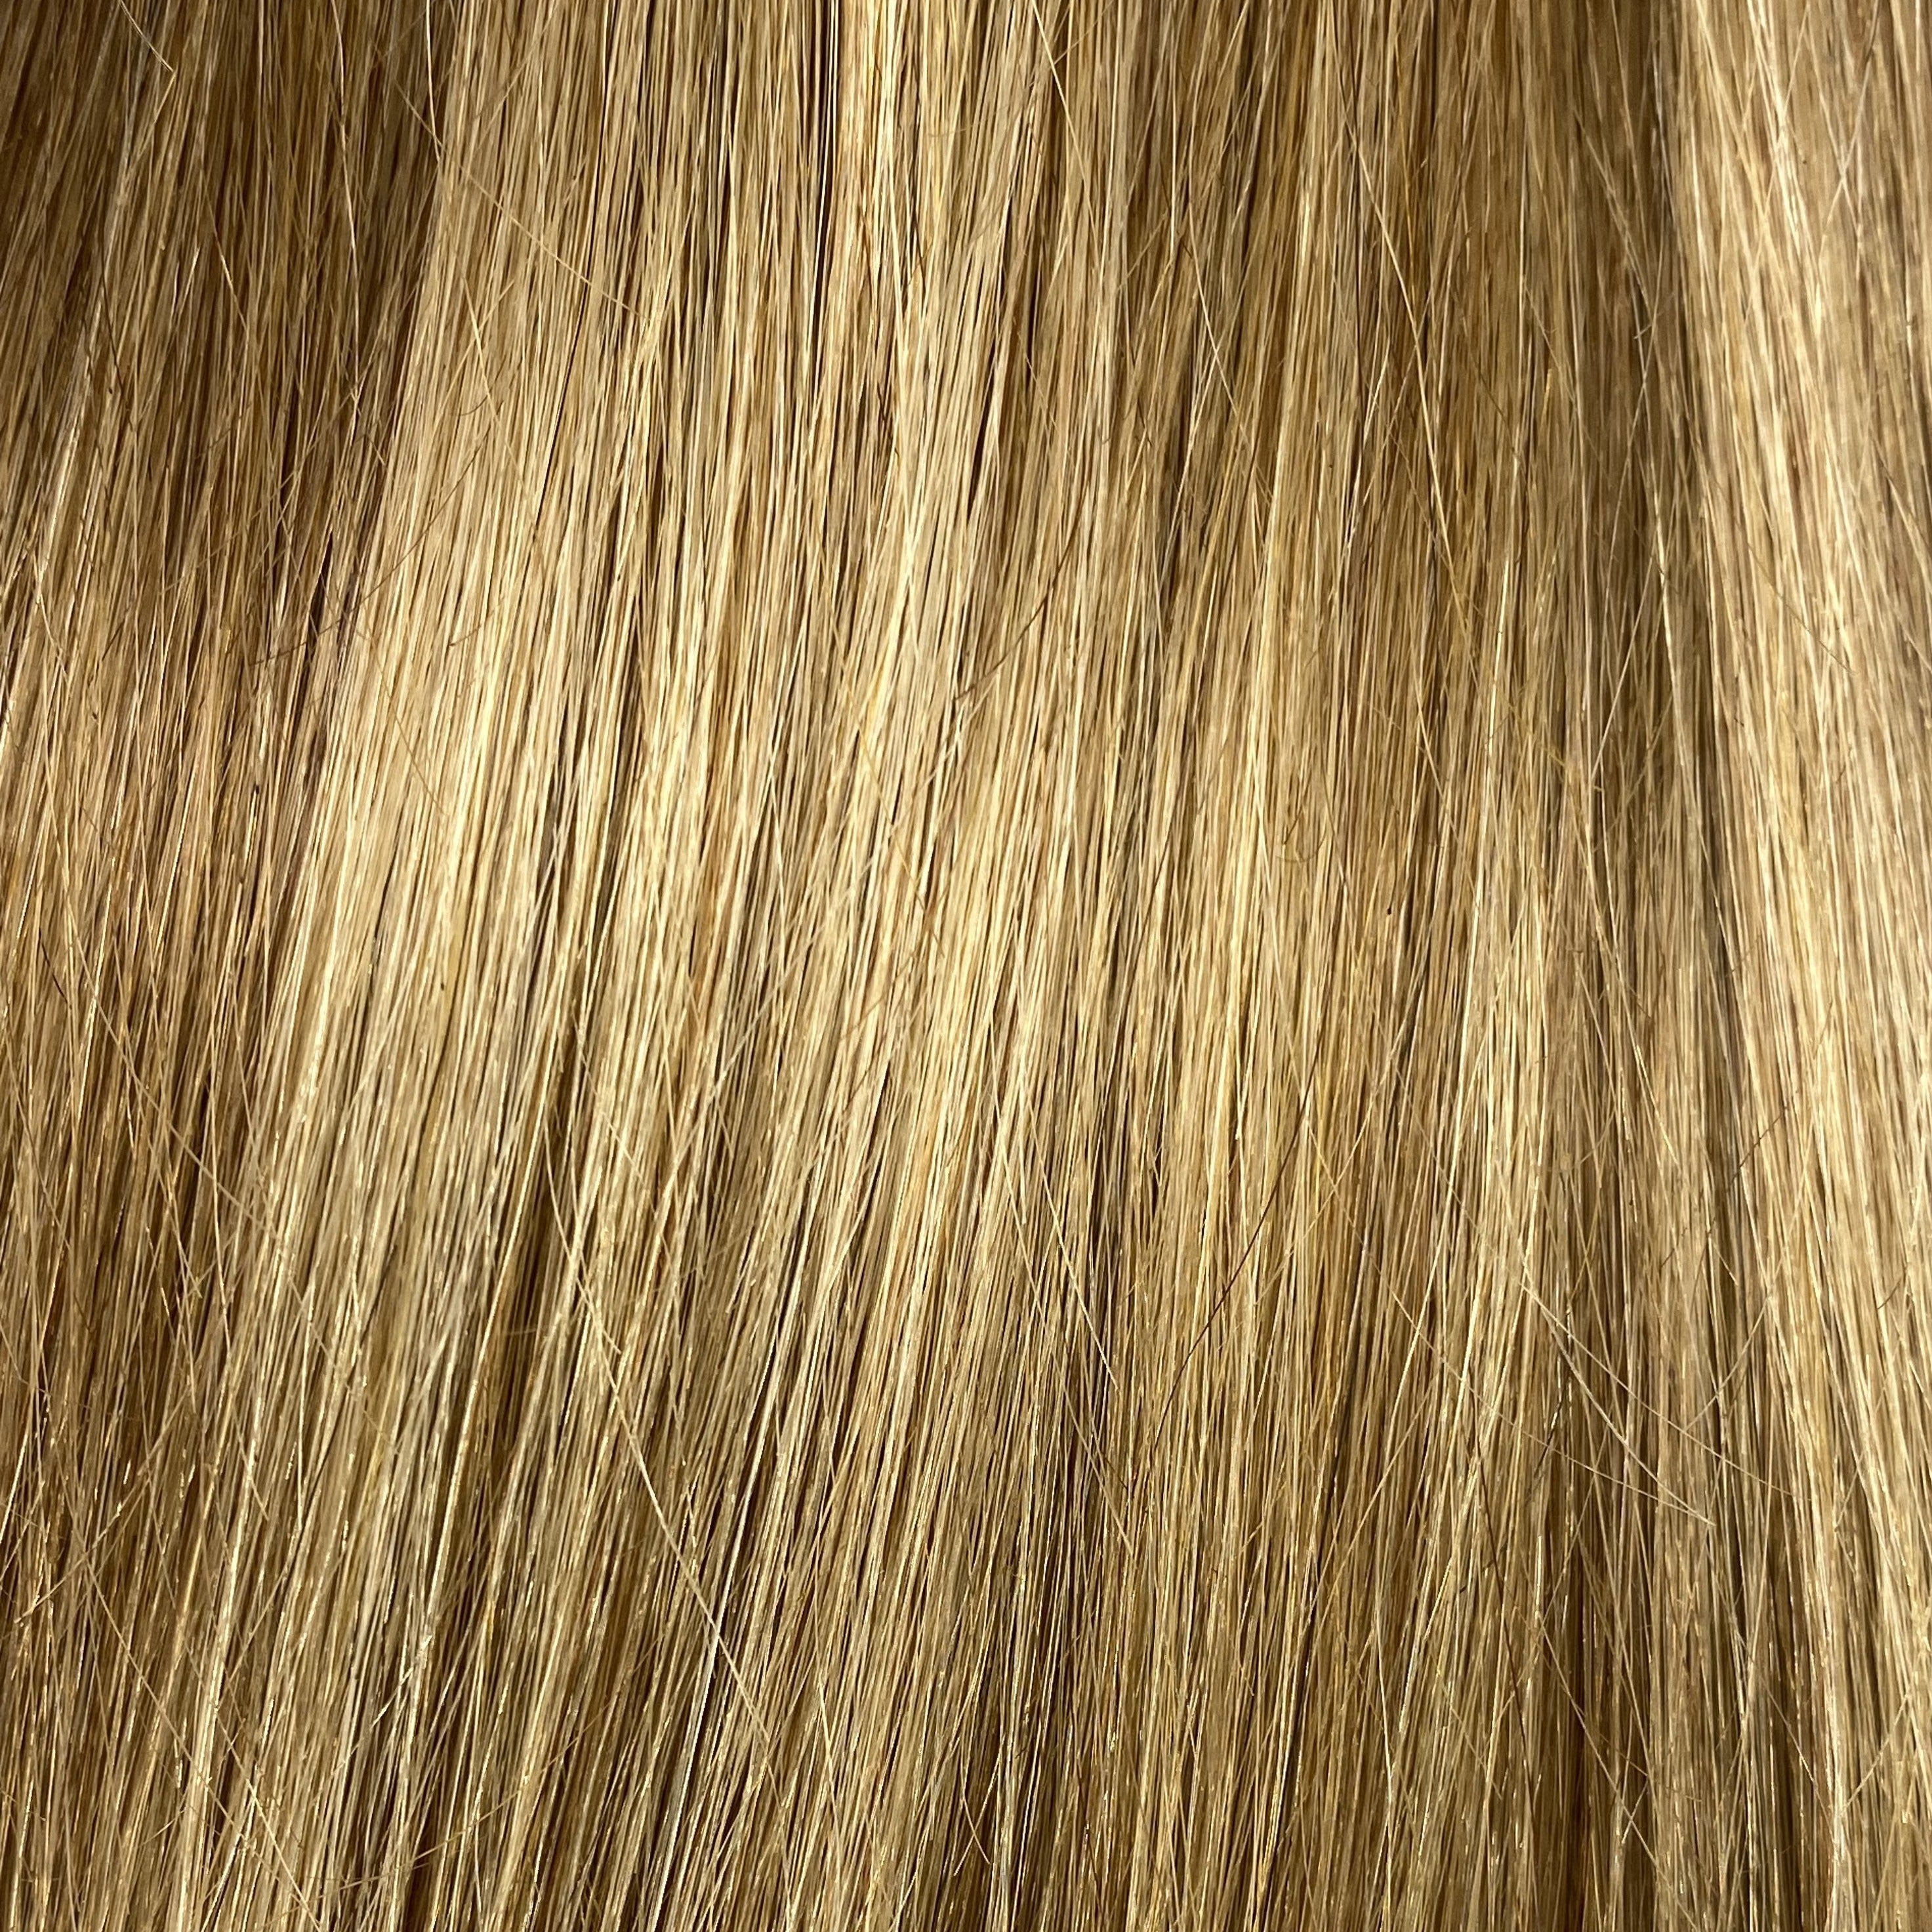 Velo Sale #8/16 - 16 inches - Dark Blonde/Light Golden Blonde - Image 1